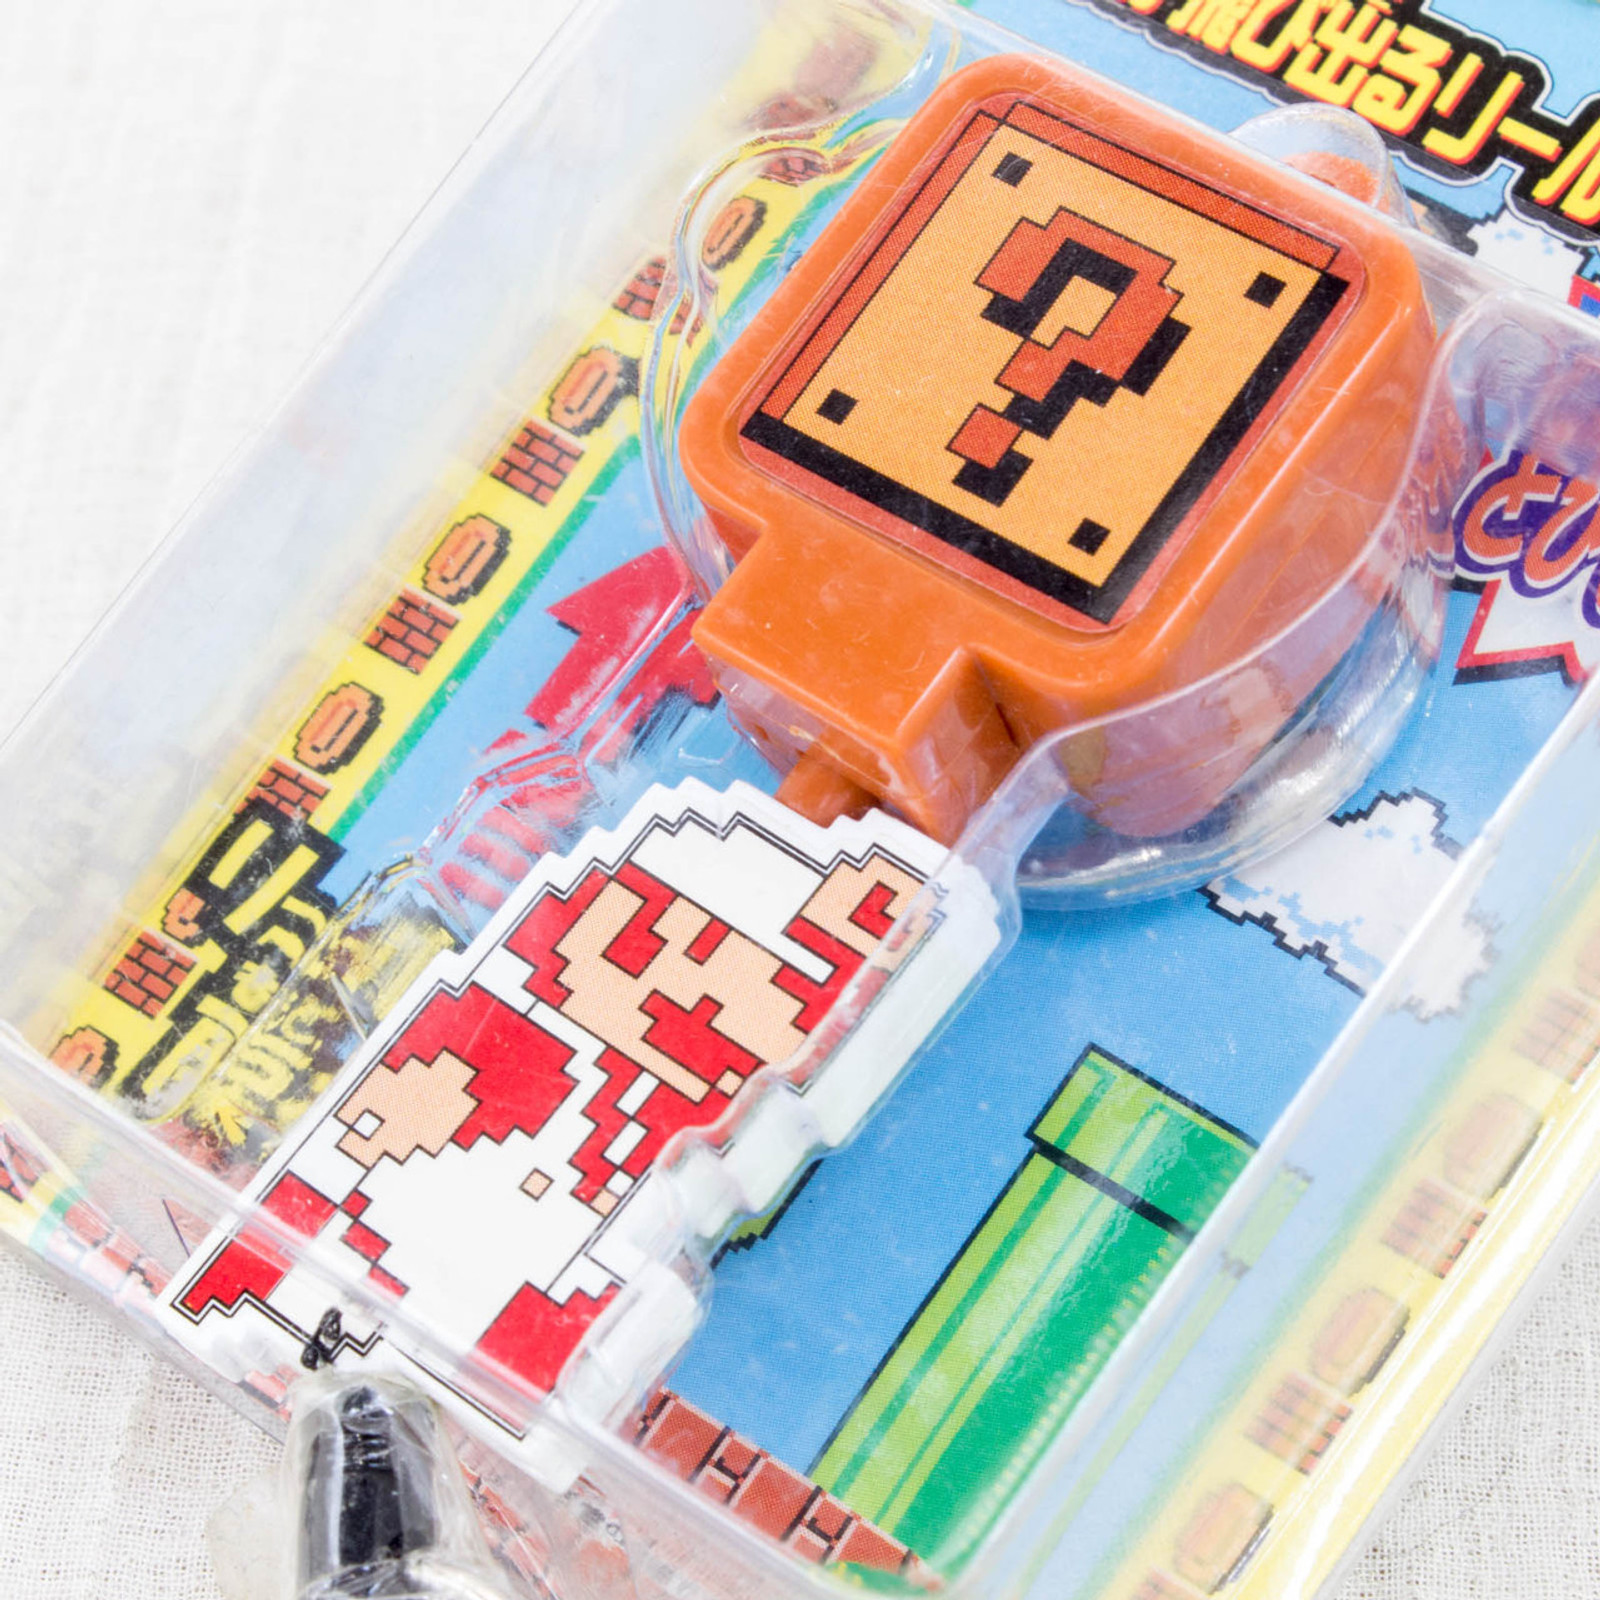 Super Mario Bros. Reel Action Pop-up Coin Keychain Fire Matio Nintendo JAPAN